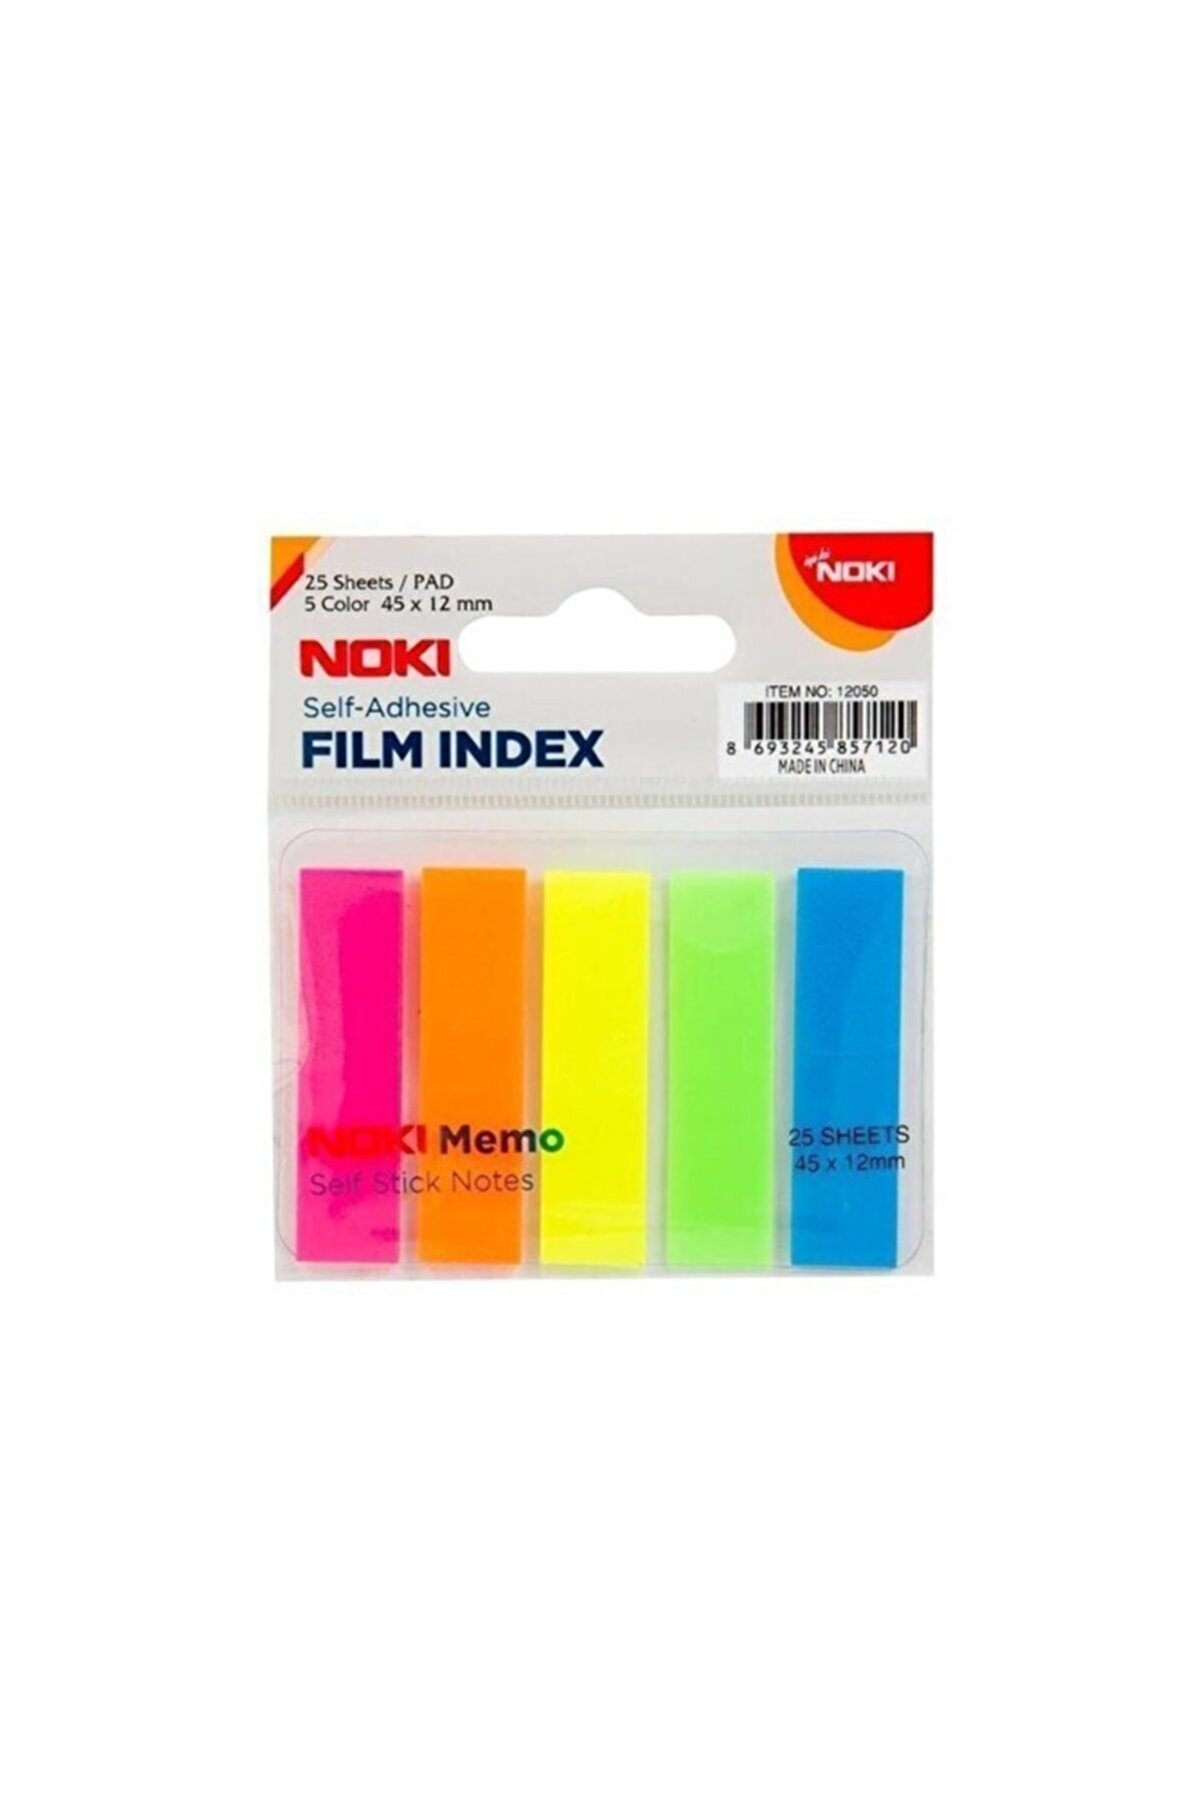 Noki Film Index Memo 5 Renk 12x45mm 25 Yp. 12050 Yapışkan Notluk